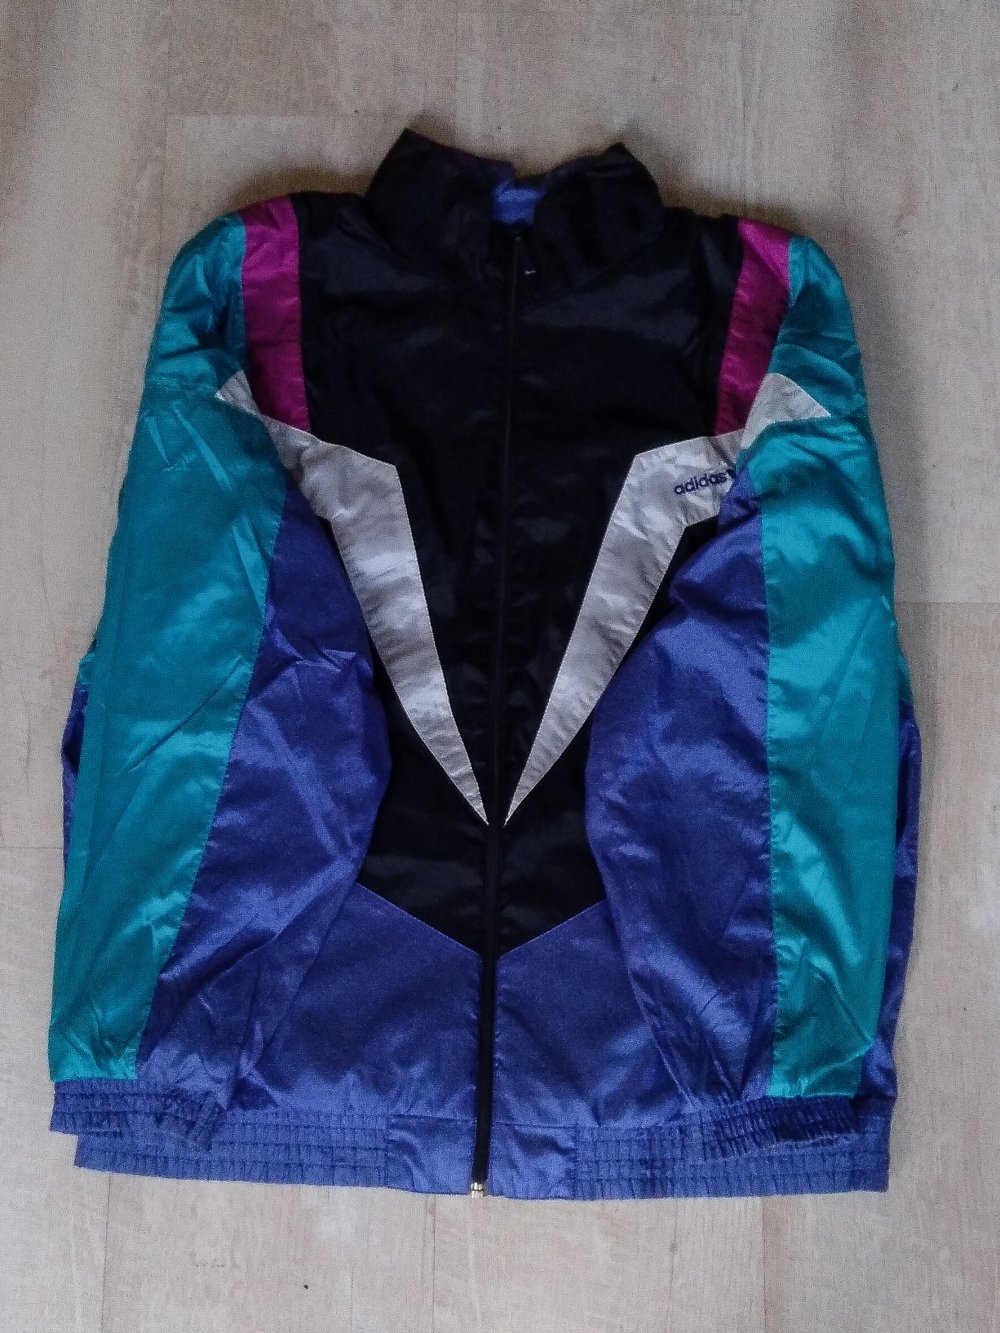 Adidas Anzug windbreaker training Jacke Hose Tracksuit blau schwarz türkis weiß selten limited